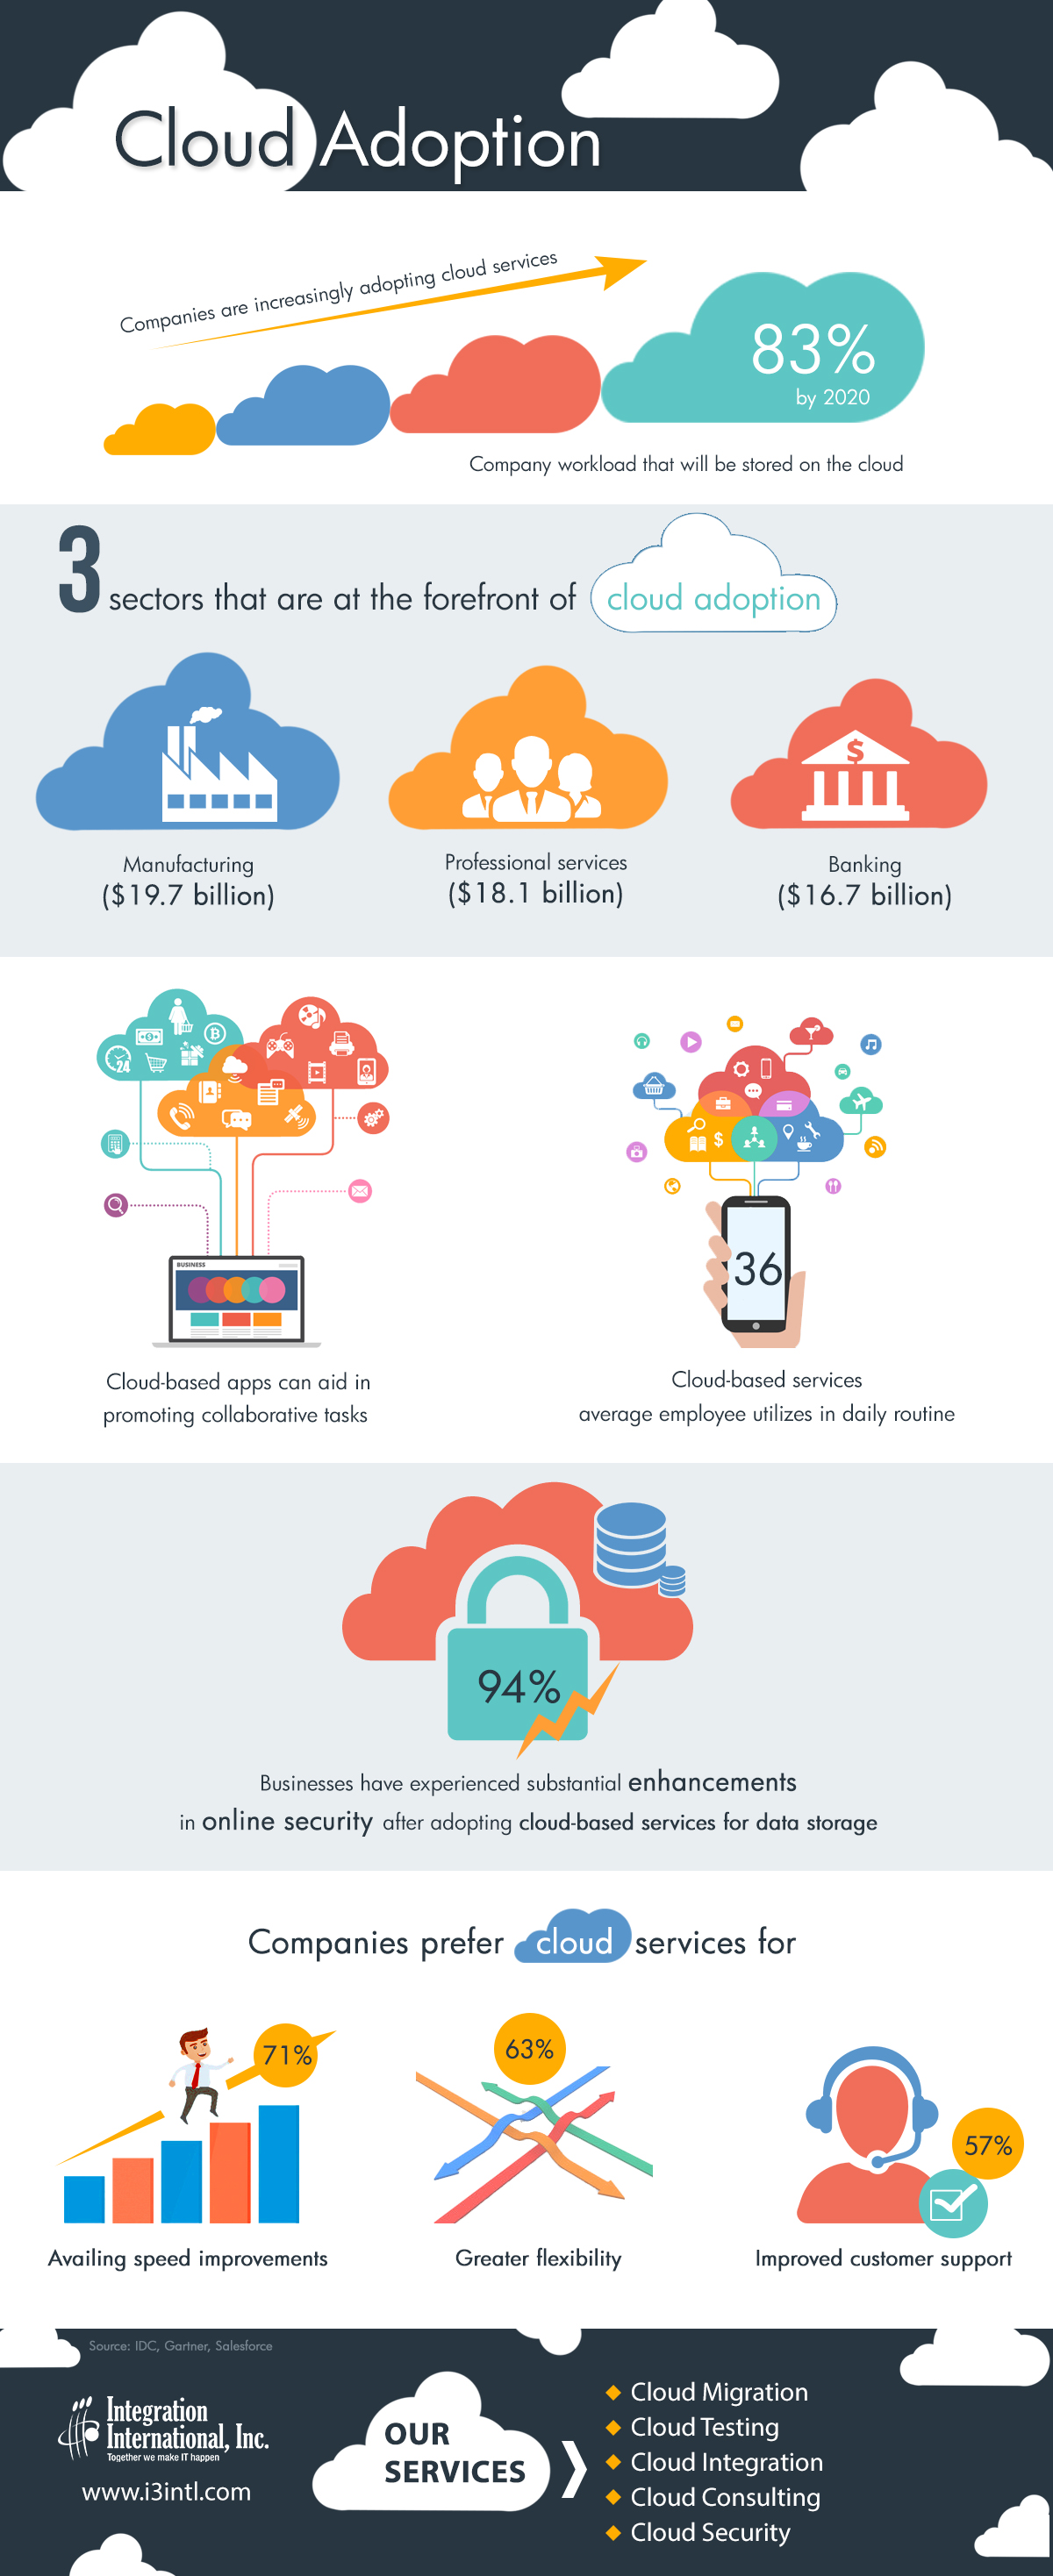 Cloud application across various industries